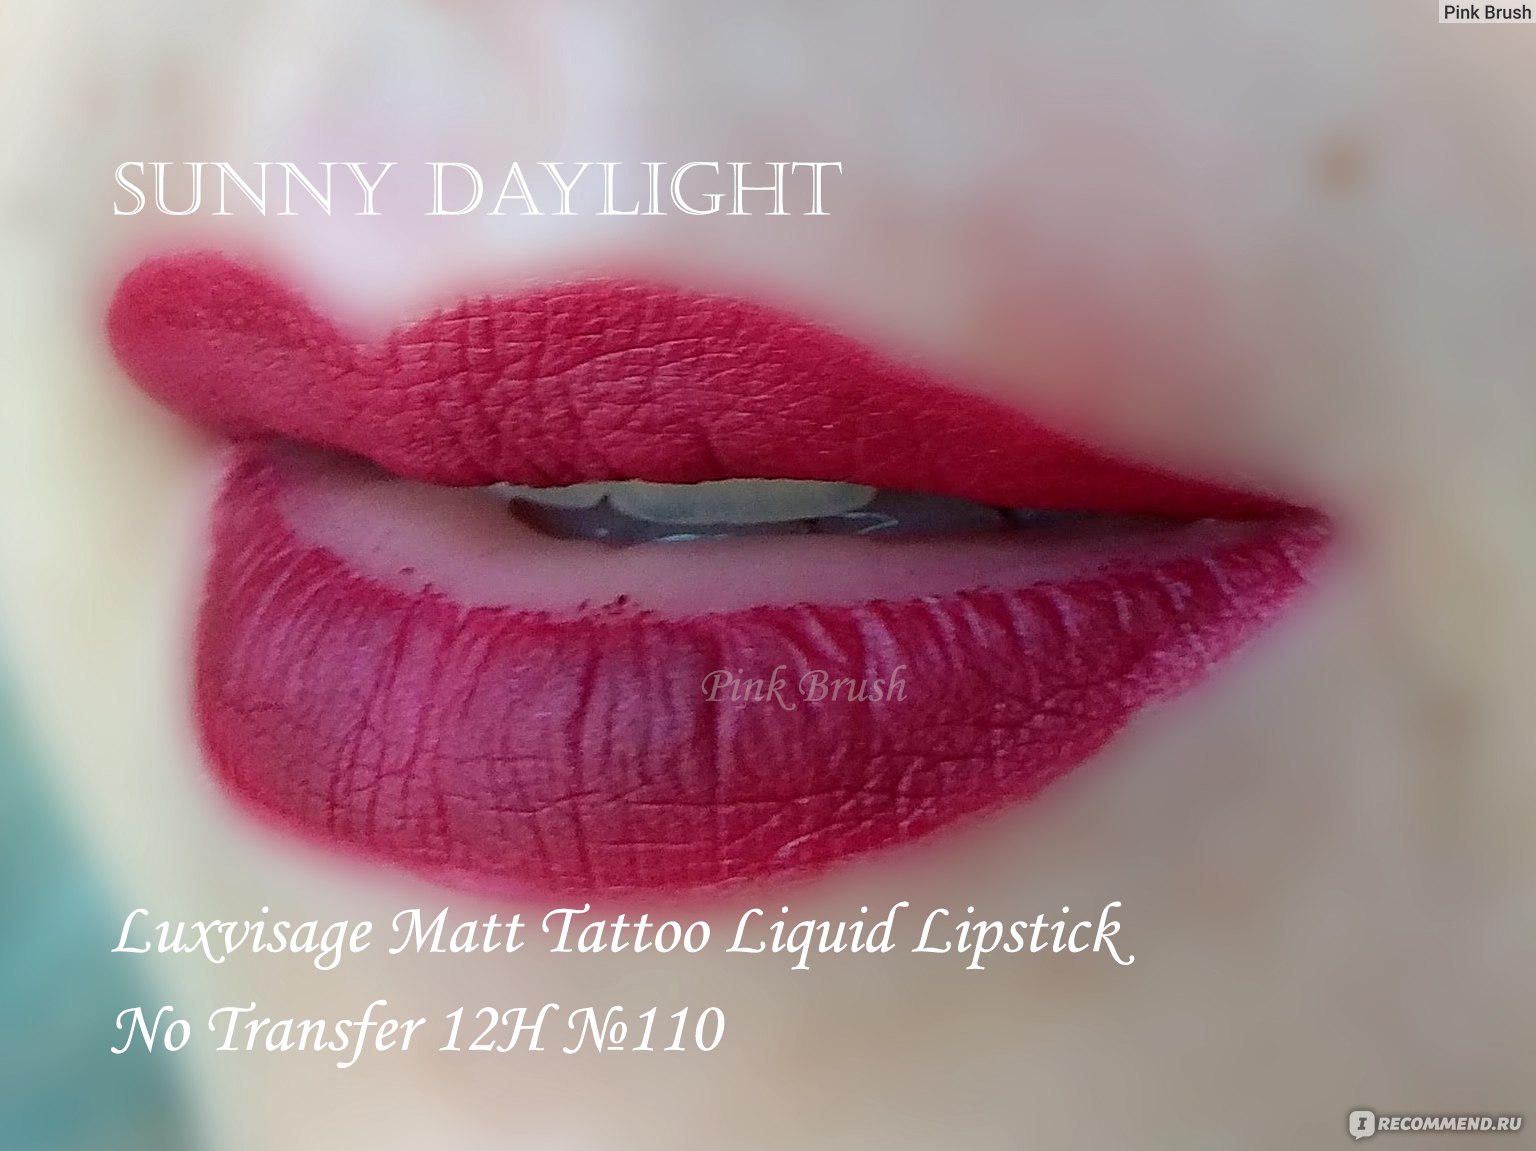 Жидкая матовая помада LUXVISAGE Matt Tattoo Liquid Lipstick no transfer 12h